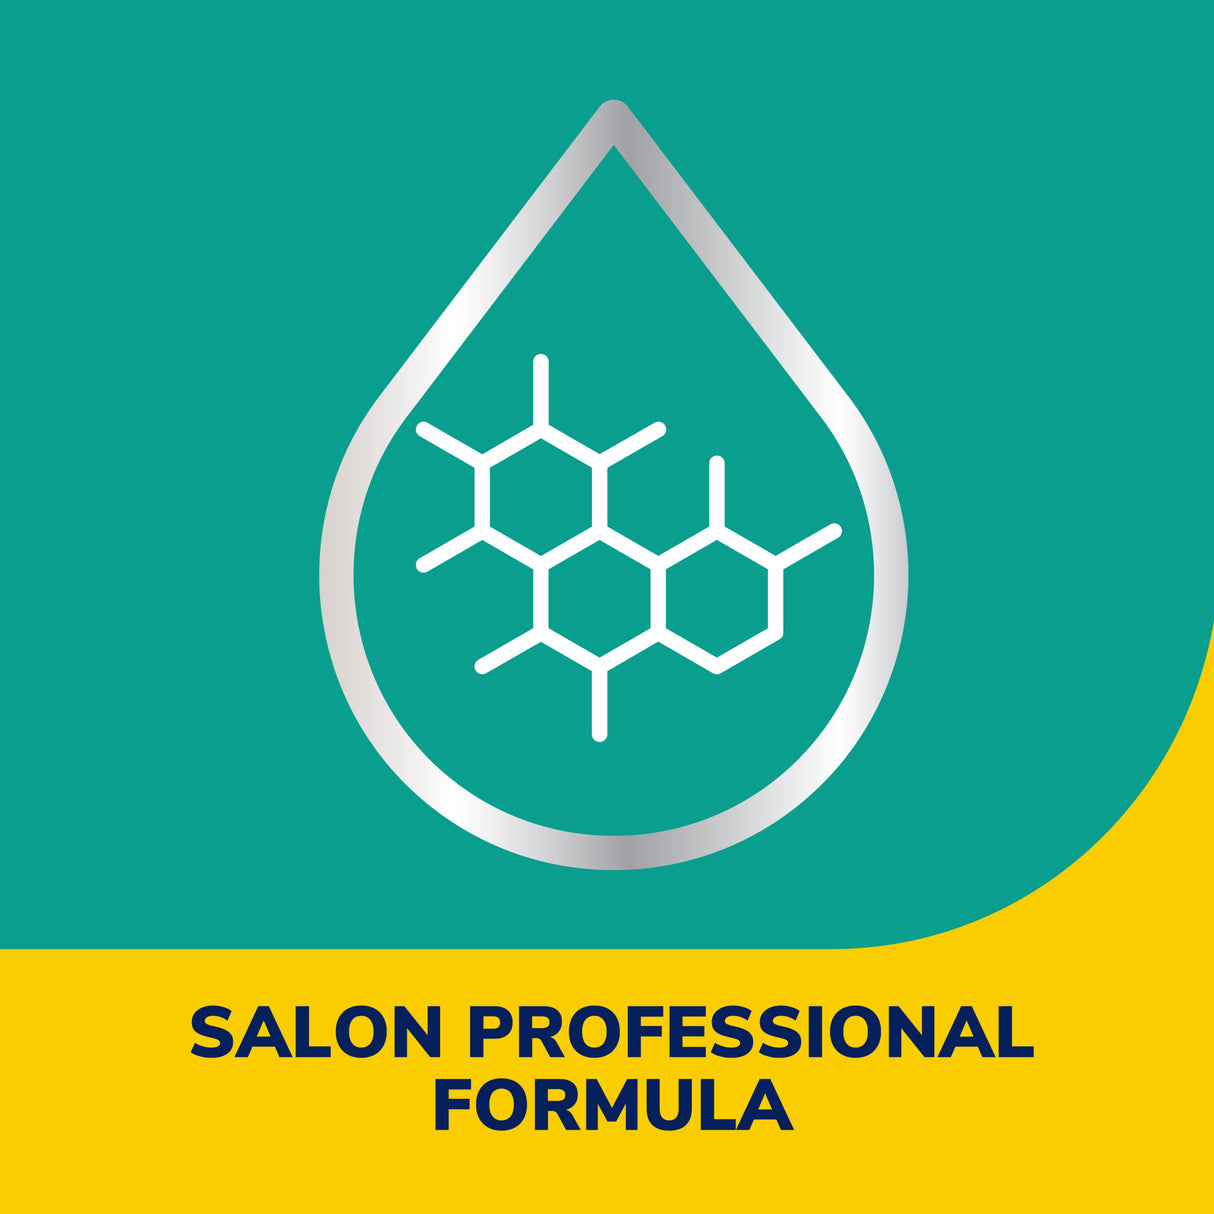 image of salon professional formula